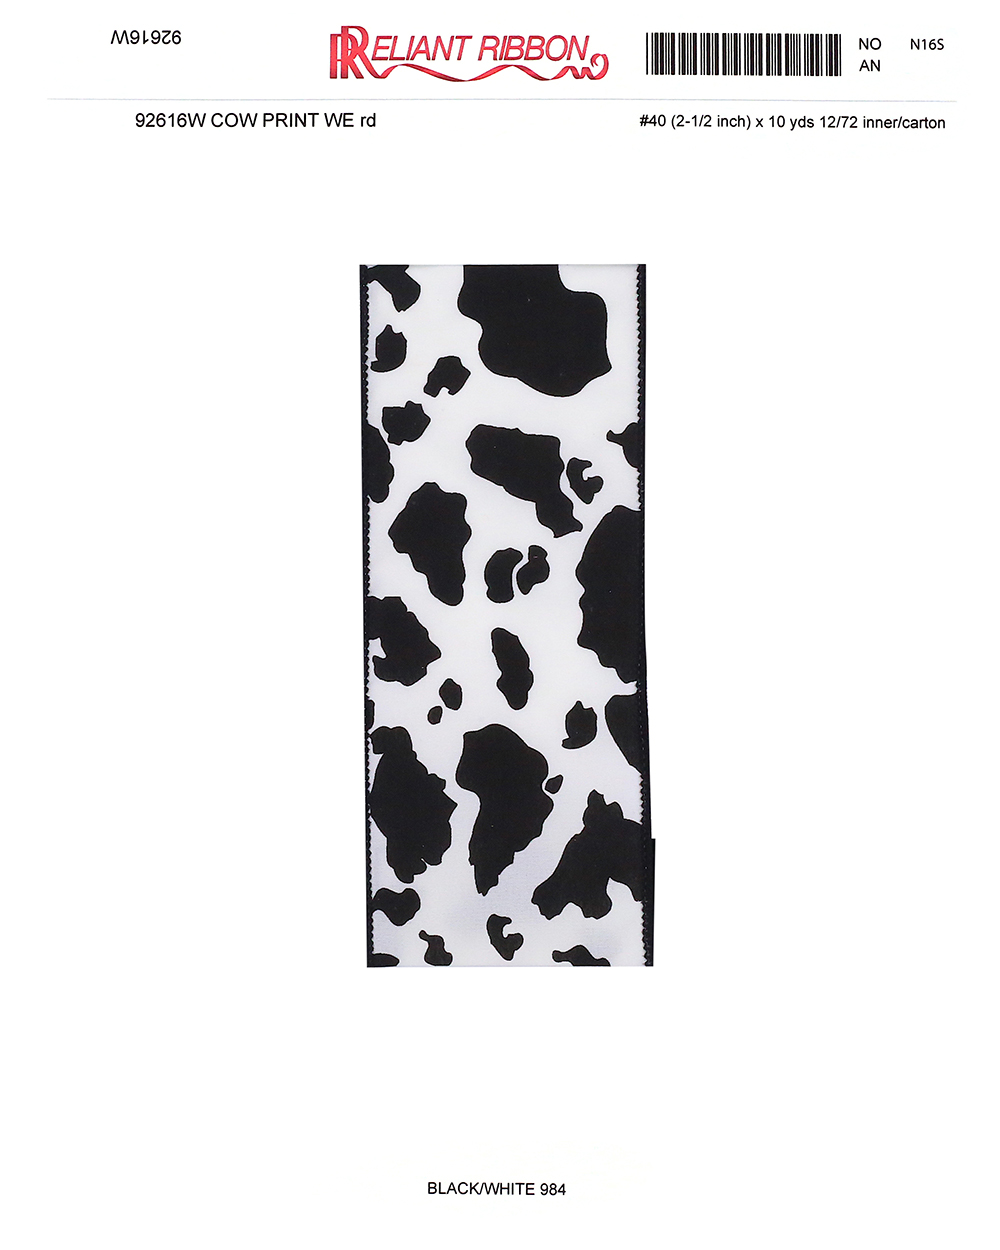 Reliant Ribbon - 92616W-984-40F, Cow Print We Rd Ribbon, Black/white, 2-1/2  Inch, 10 Yards